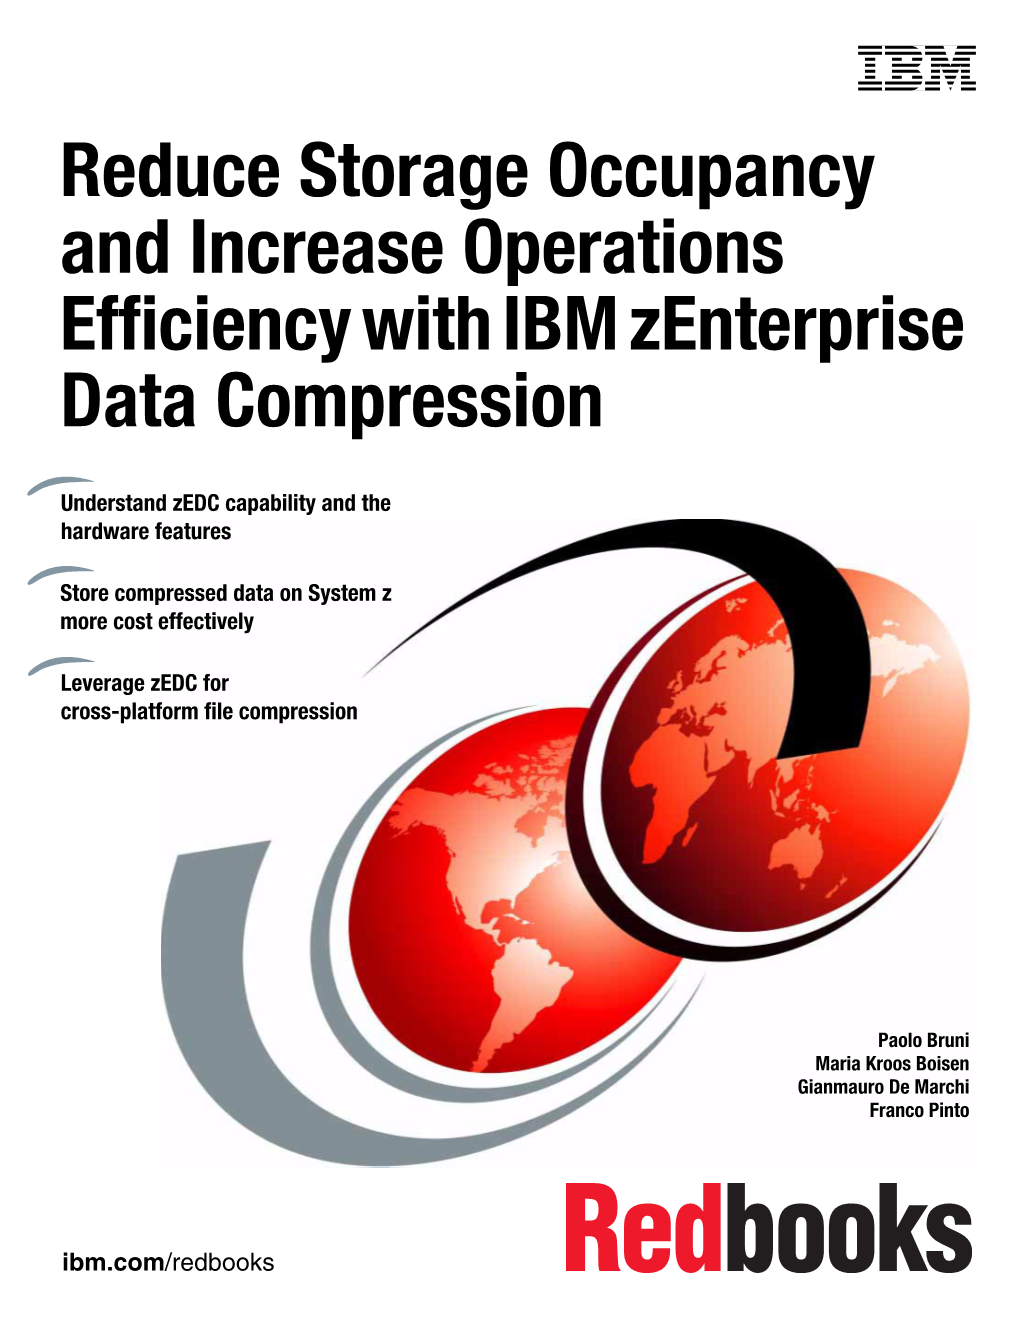 IBM Zenterprise Data Compression